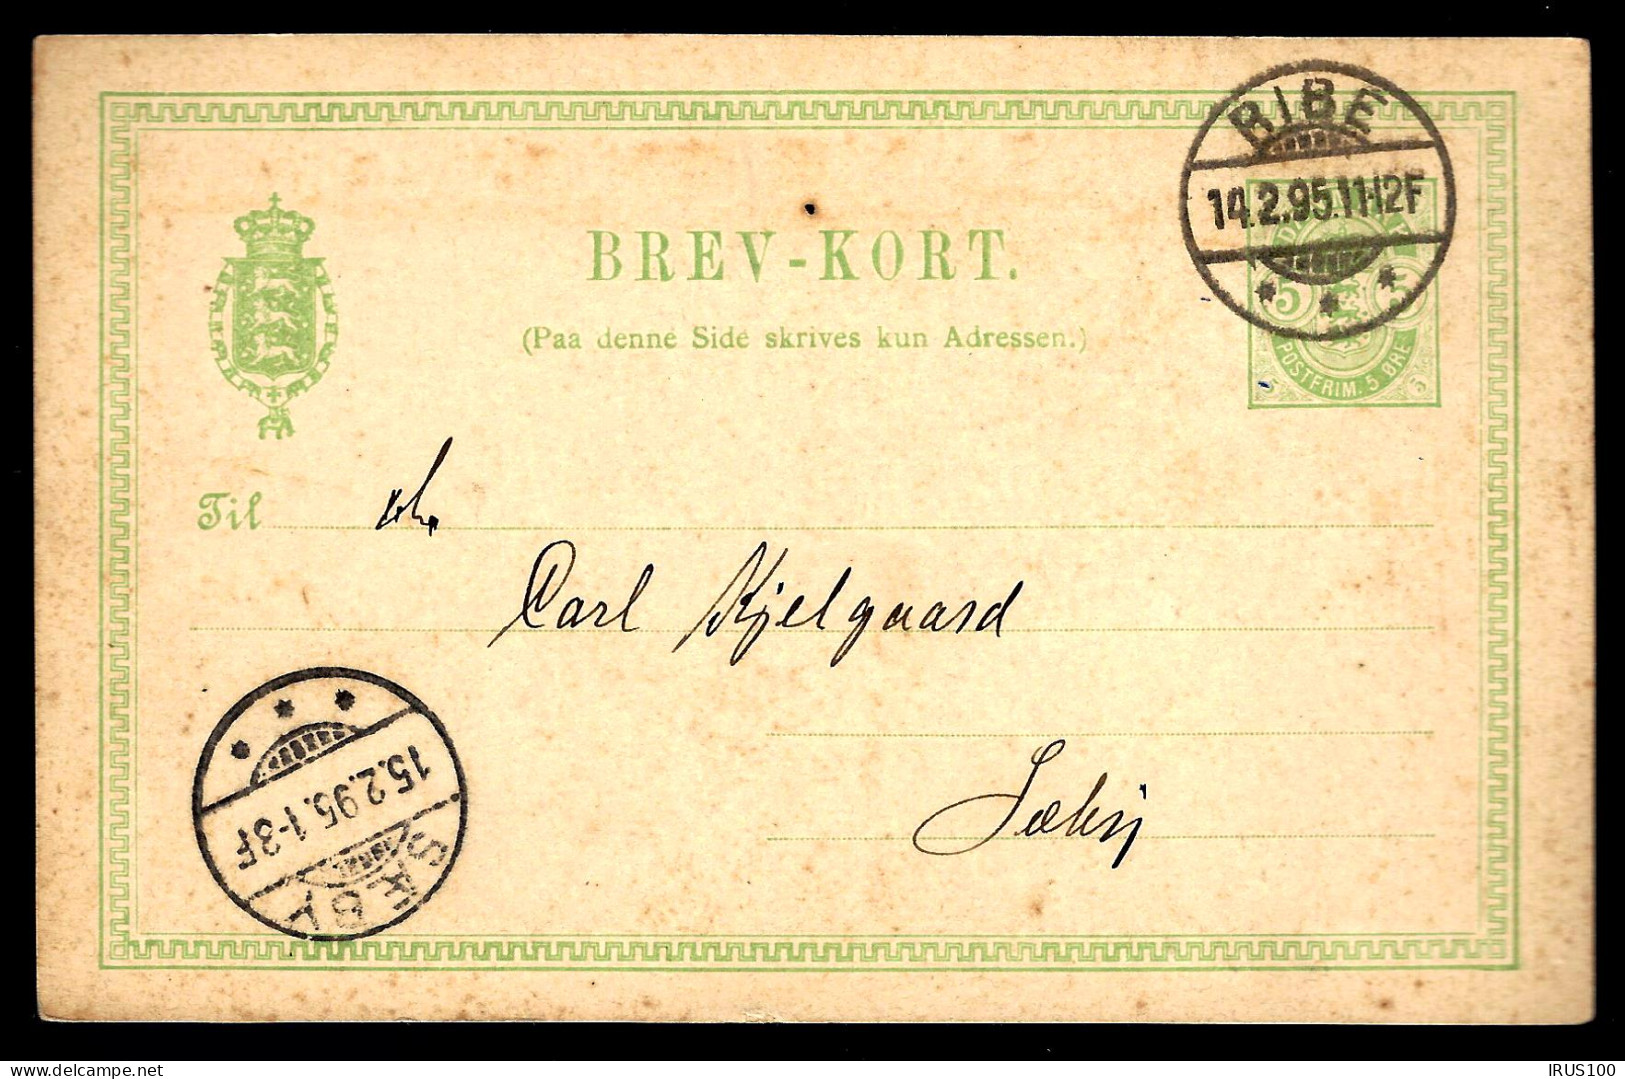 LETTRE EN PROVENANCE DE RIBE - DANEMARK - 1895 - Pour Saeby DANEMARK - Postal Stationery